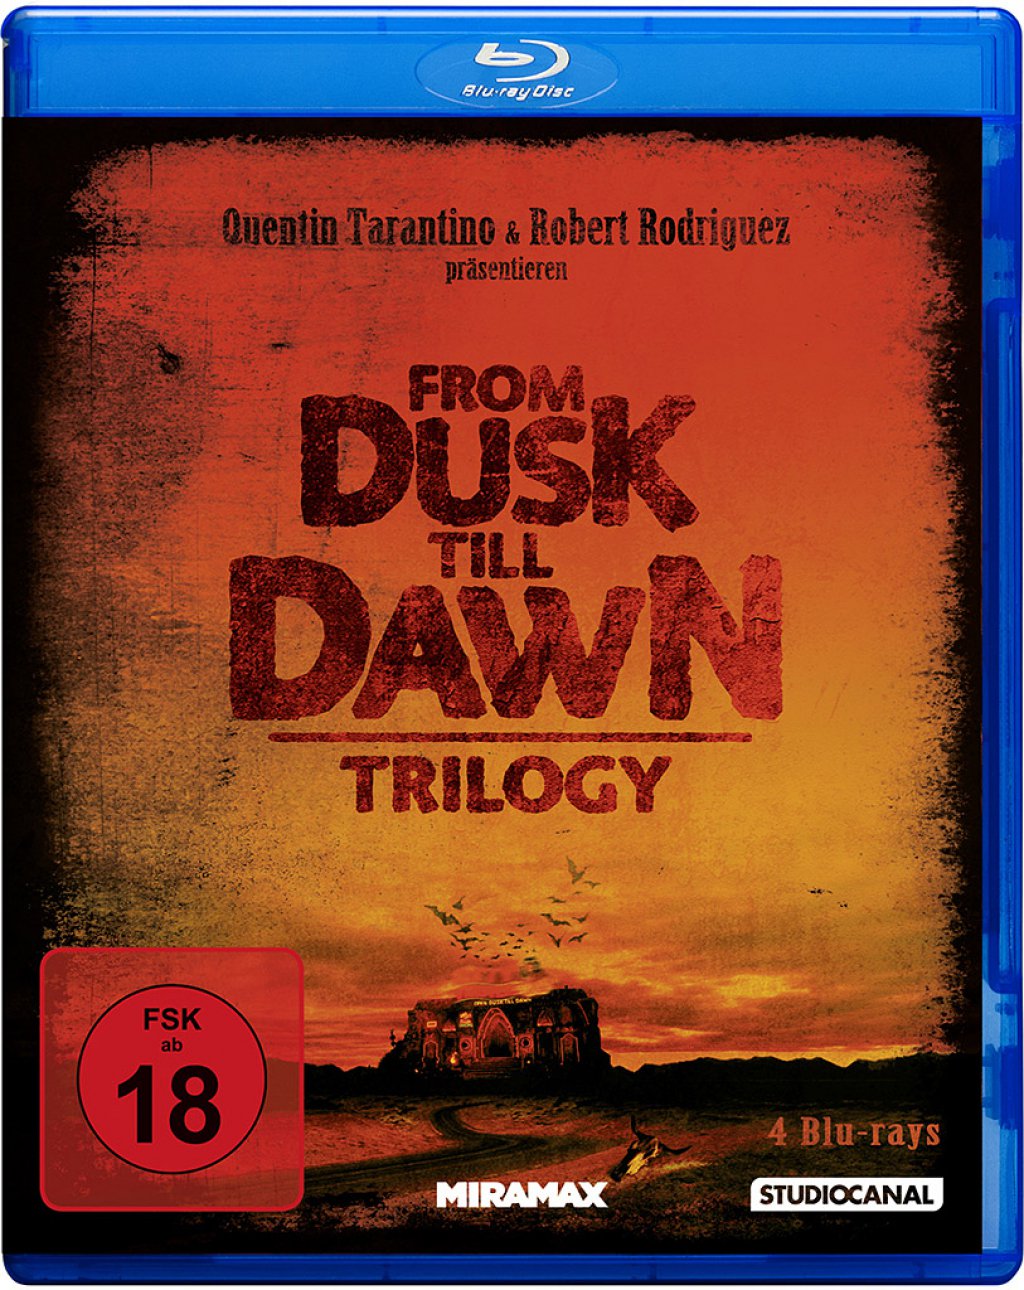 From Dusk Till Dawn - Trilogy (Blu-ray)